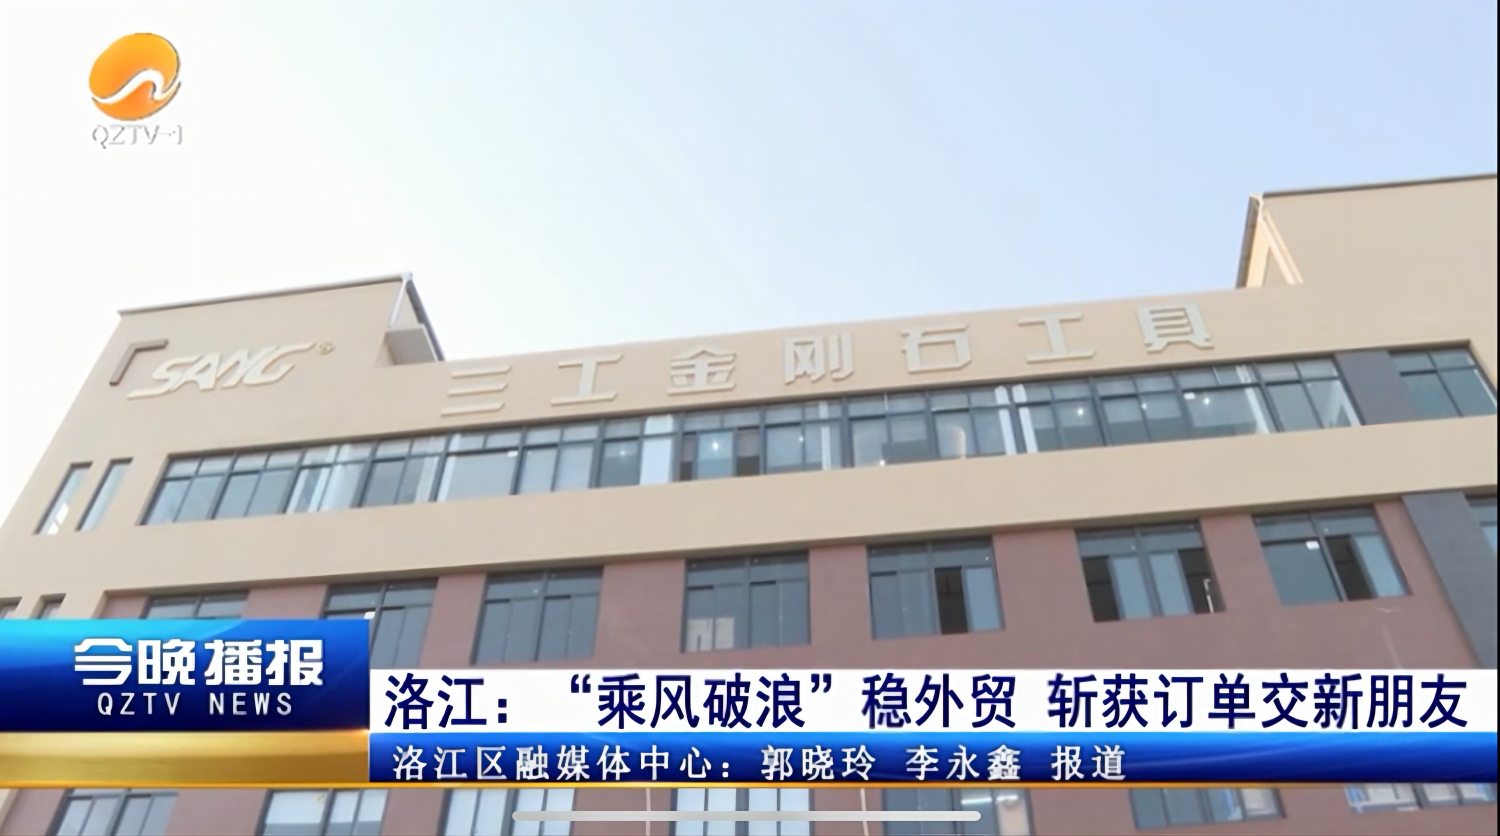 Quanzhou Sang Diamond Tools توسط People's Daily و QZTV گزارش شده است